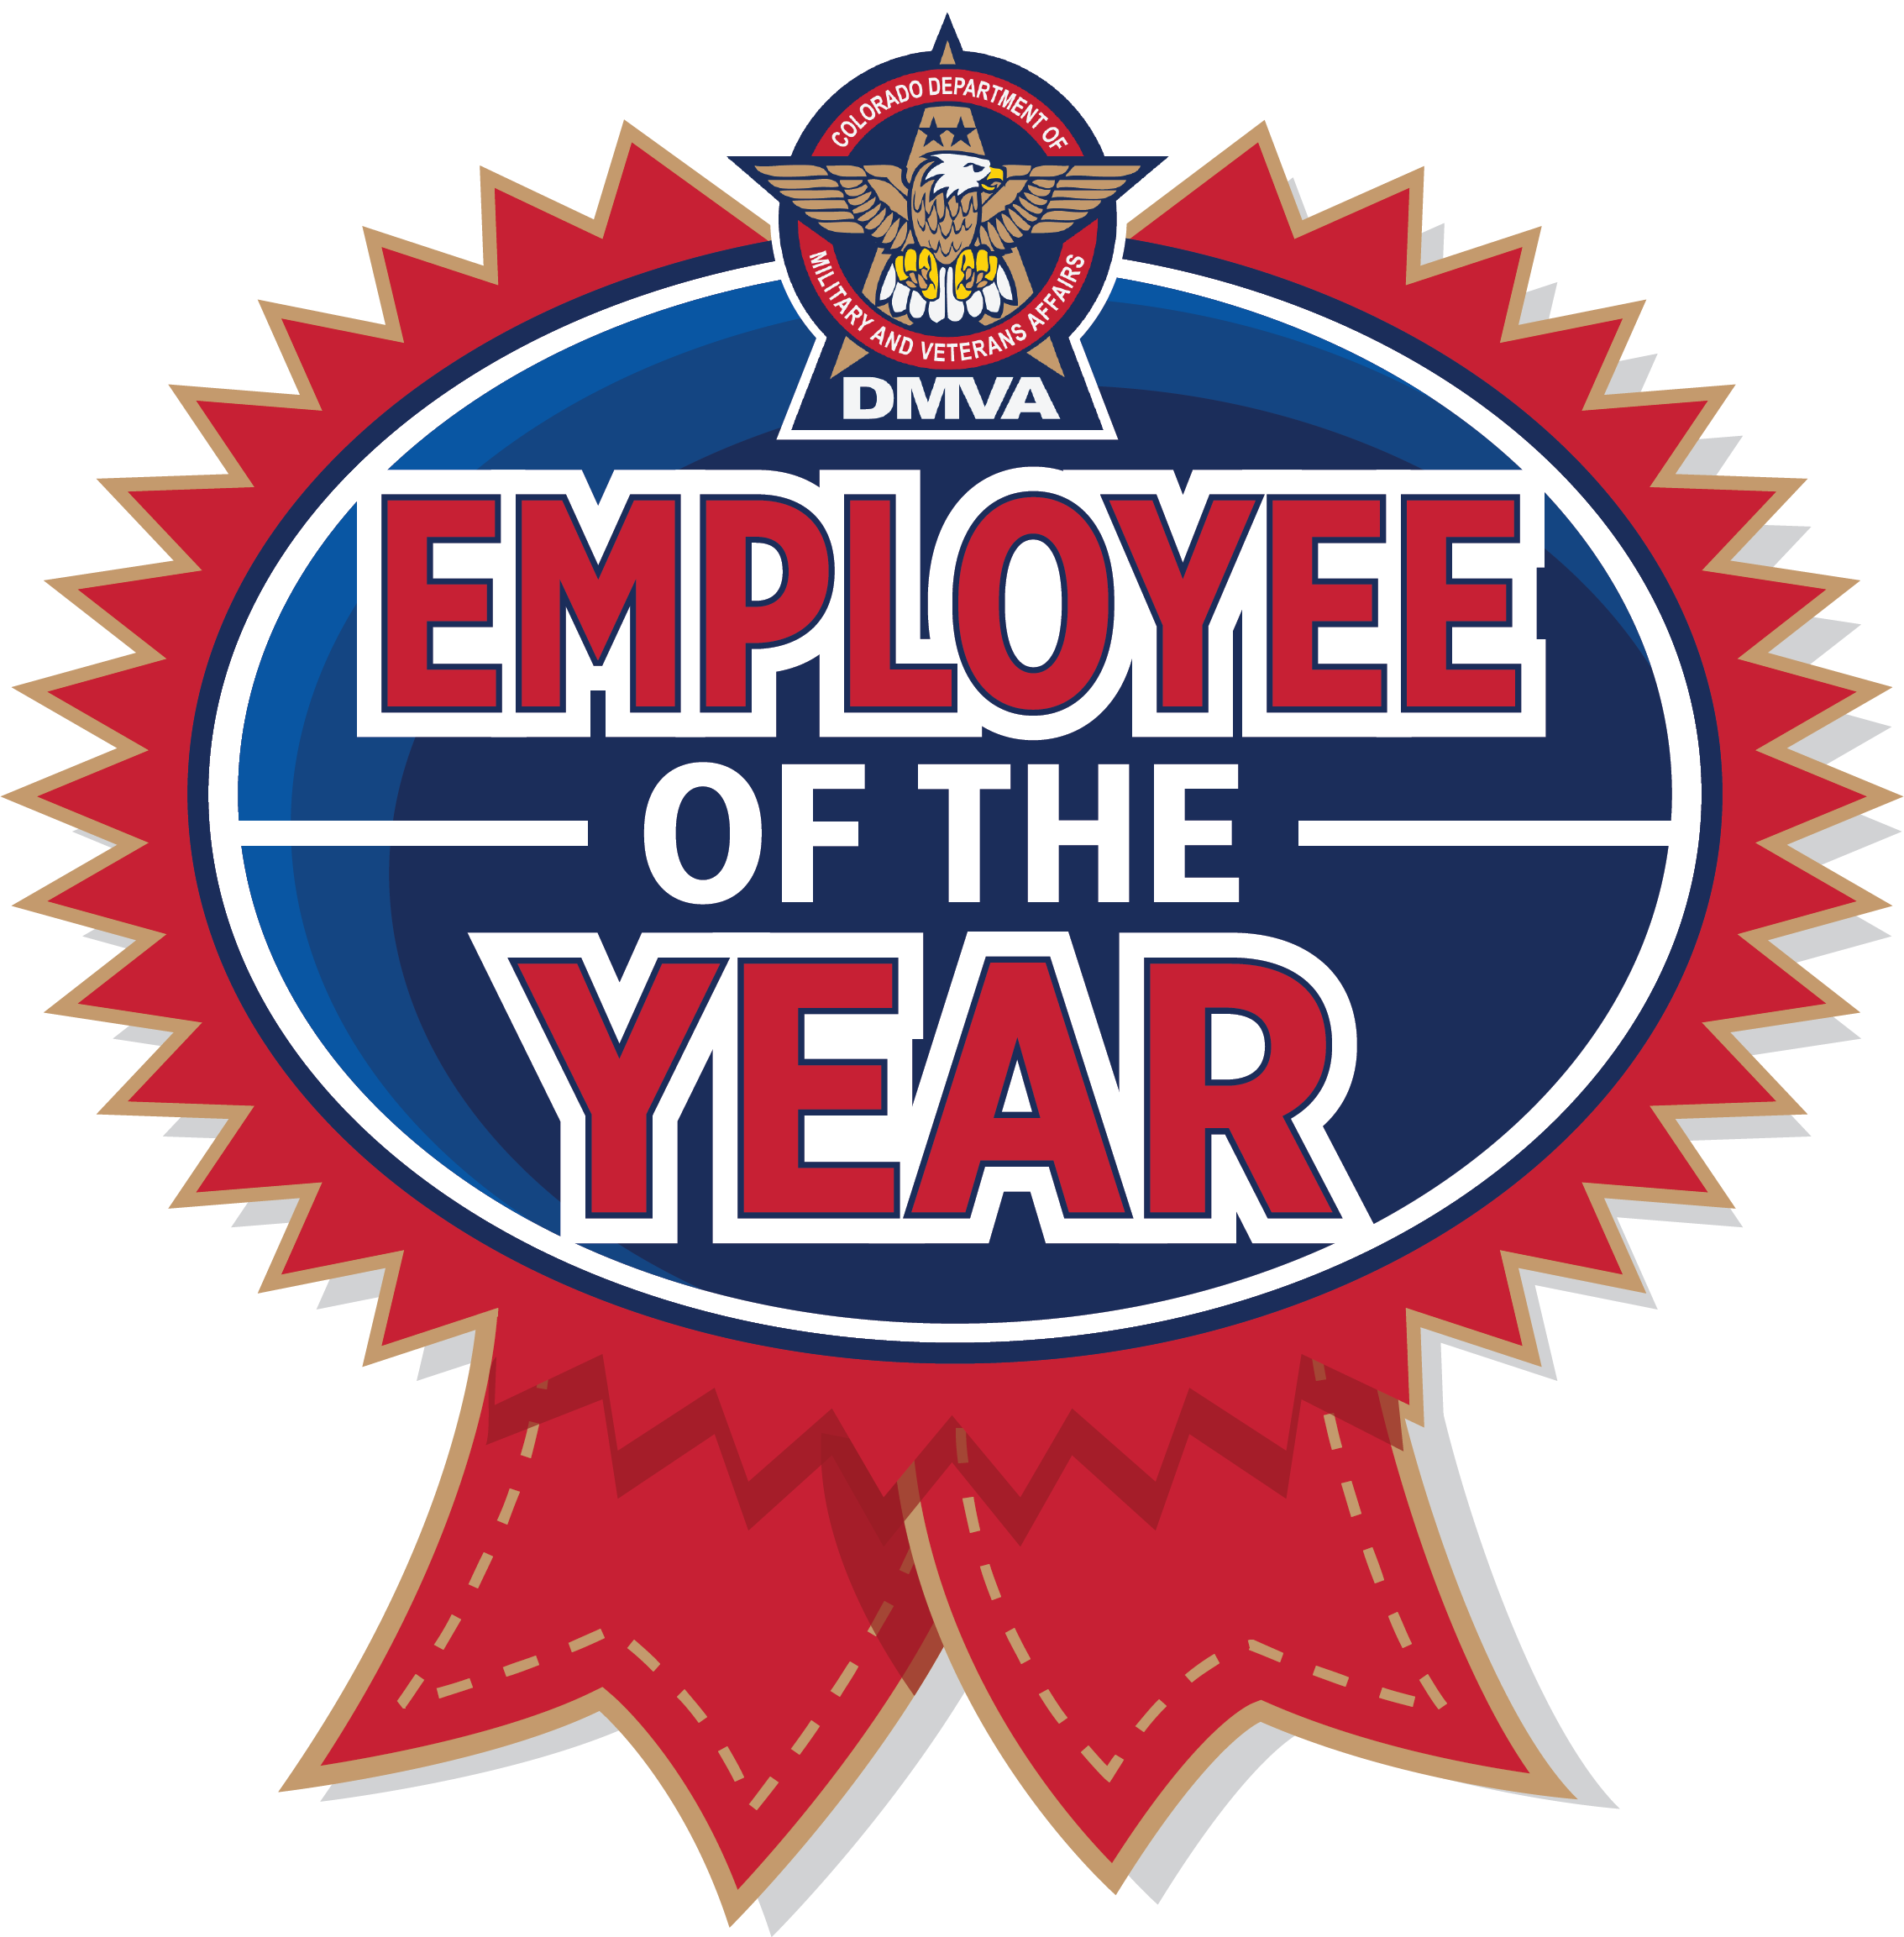 Employee of the Year logo